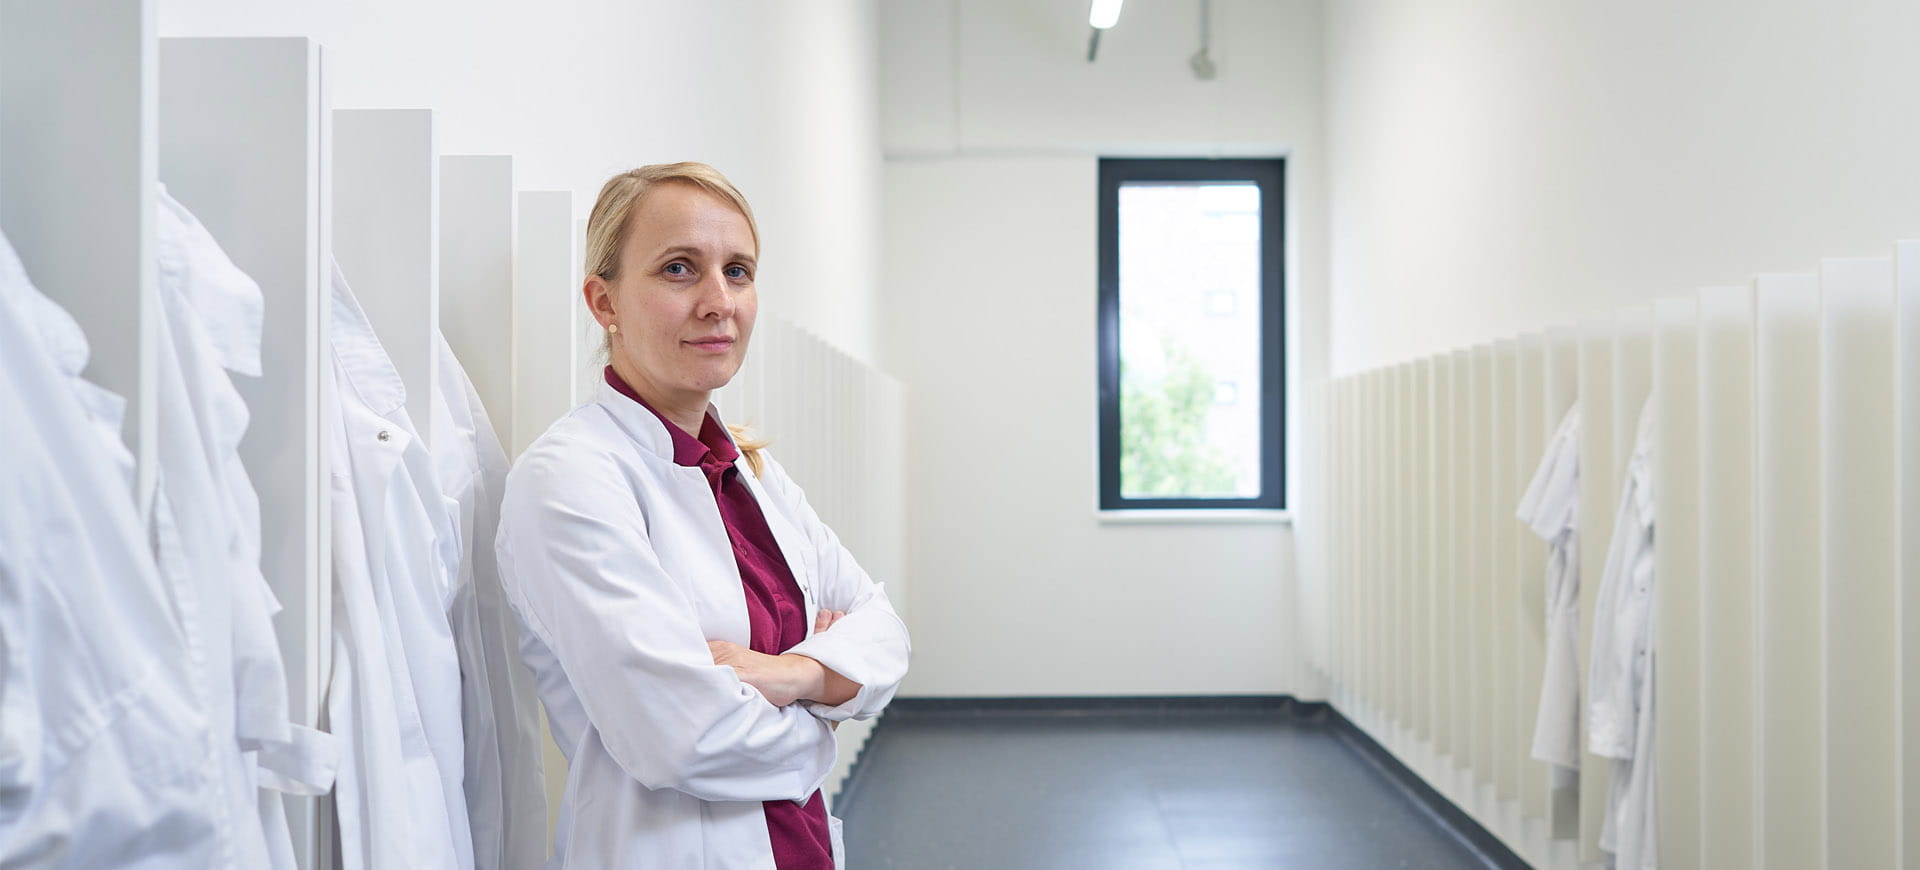 Put to the test - Dr. Katja Sänger